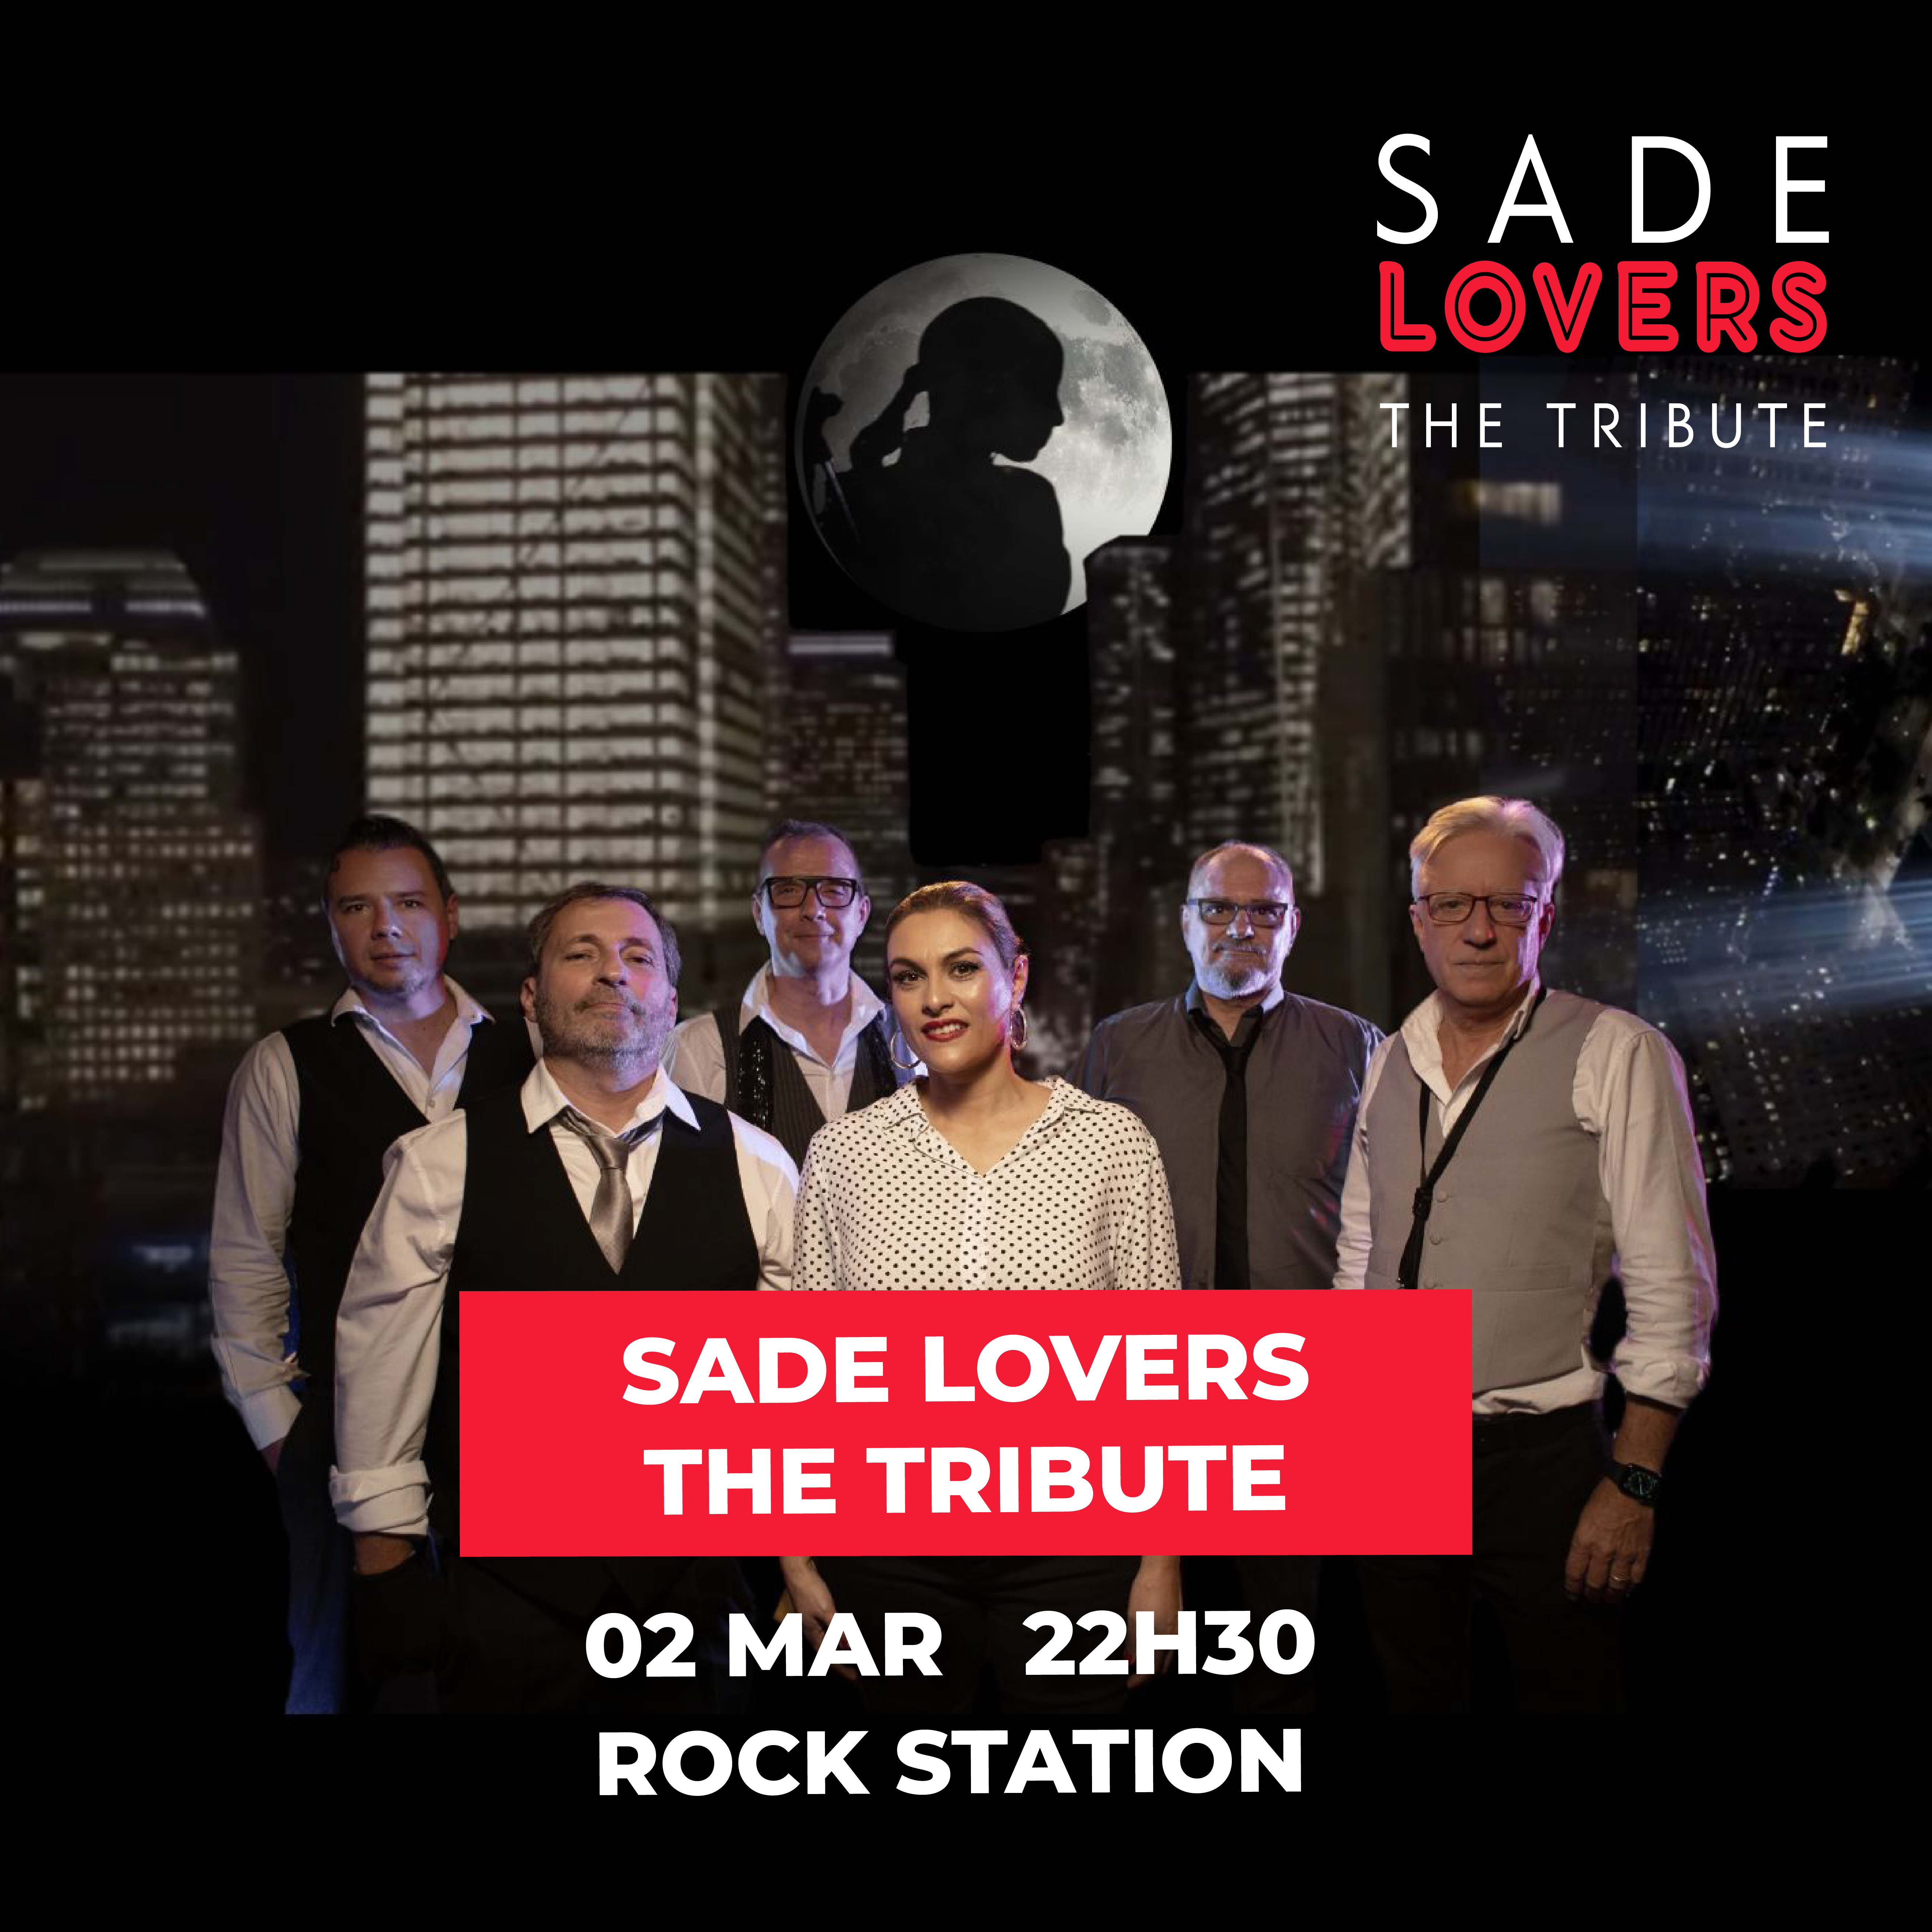 Rock Station - 02 de Março - Sade Lovers - The Tribute